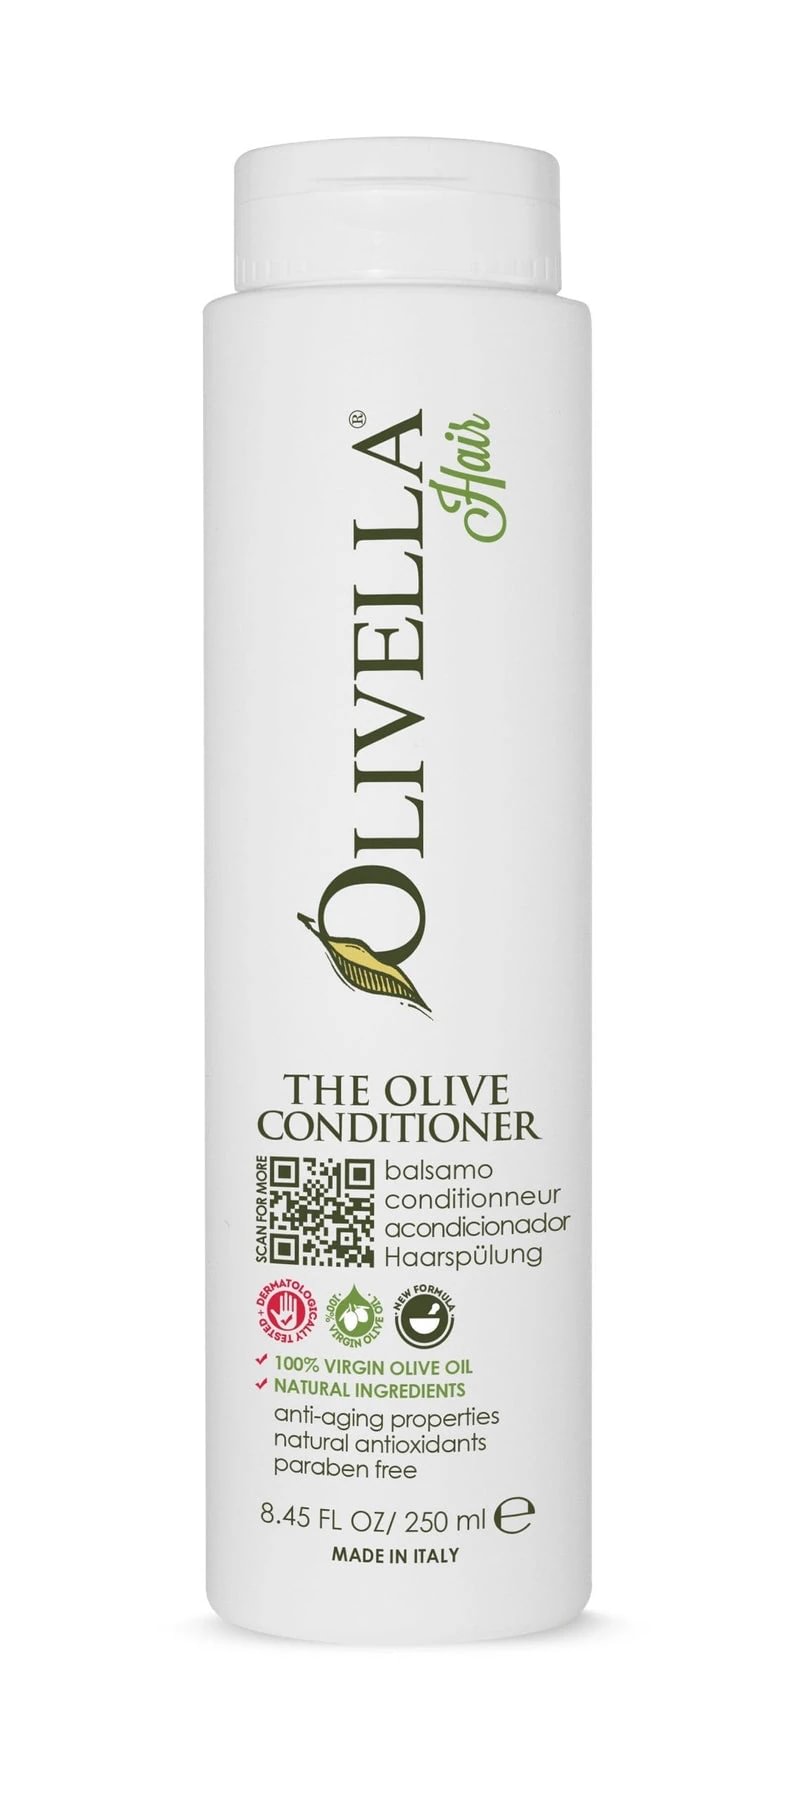 Olivella conditioner 250ml